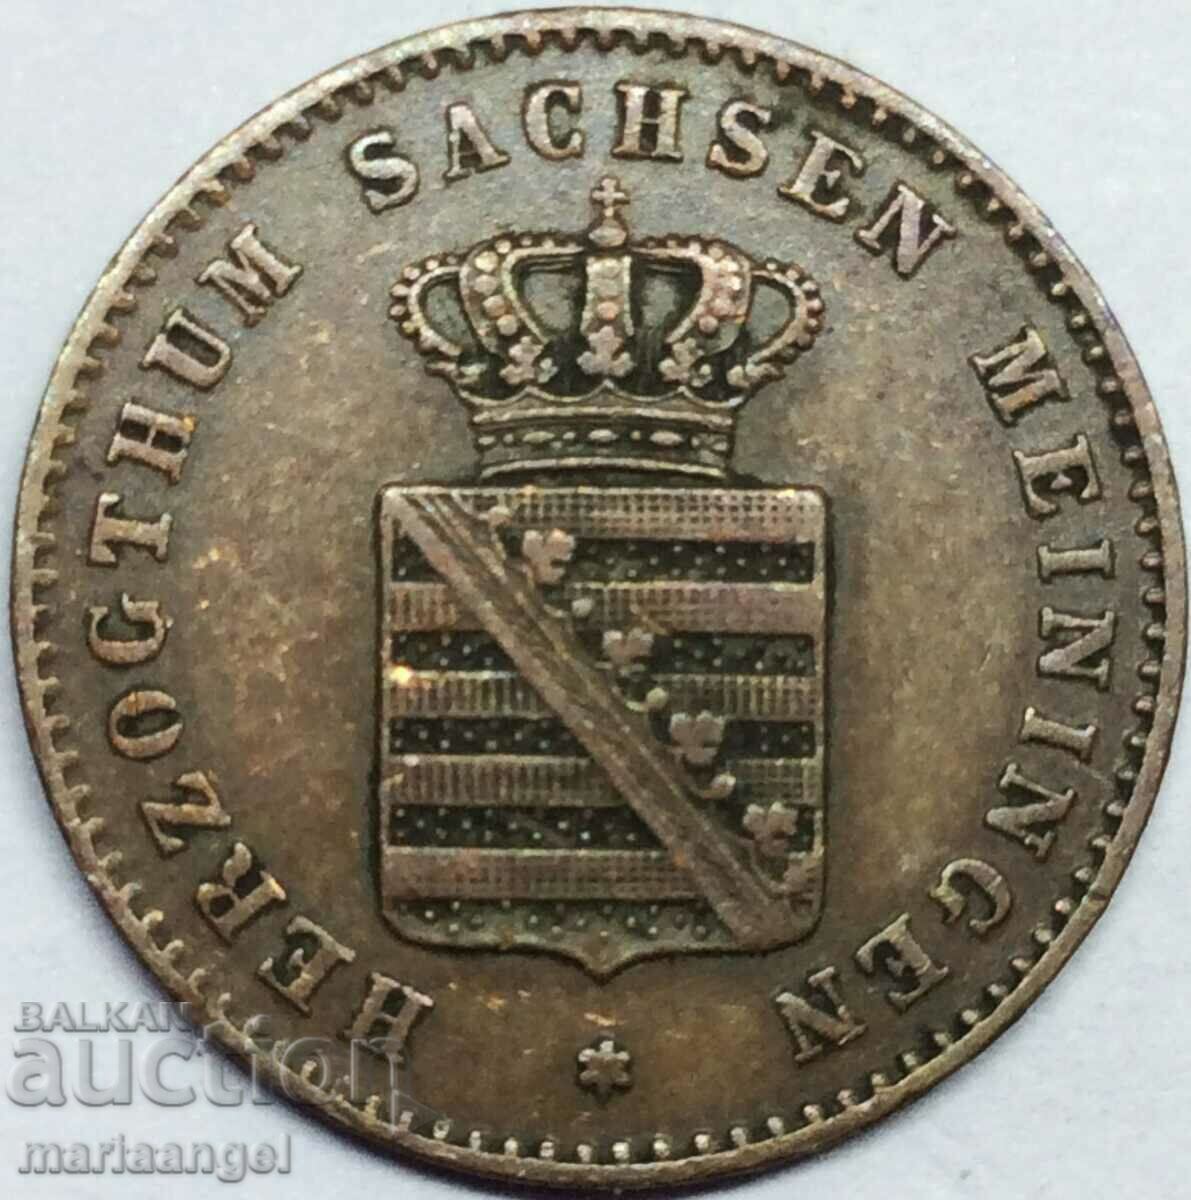 Saxony 2 Pfennig 1865 Γερμανία - αρκετά σπάνιο